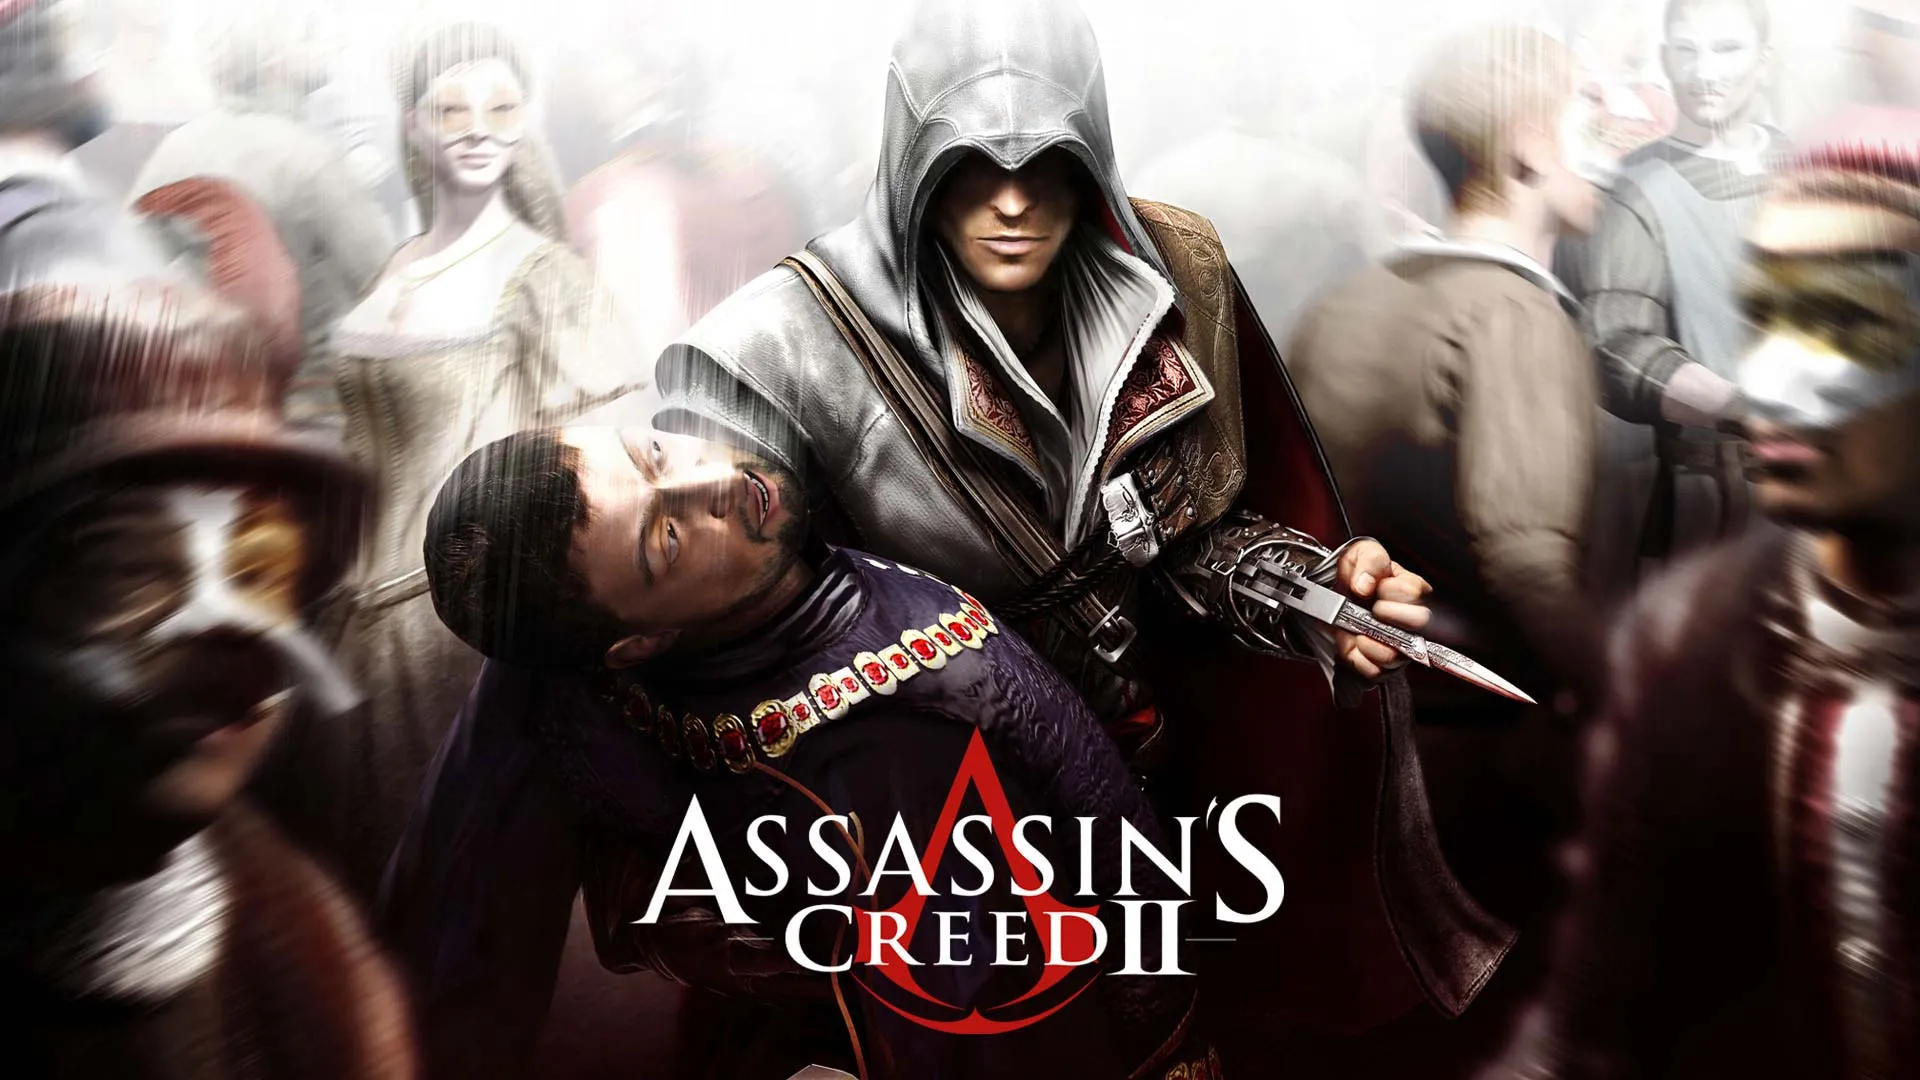 Xbox Live Gold | To “Assassin’s Creed II” ΔΩΡΕΑΝ για εσάς!